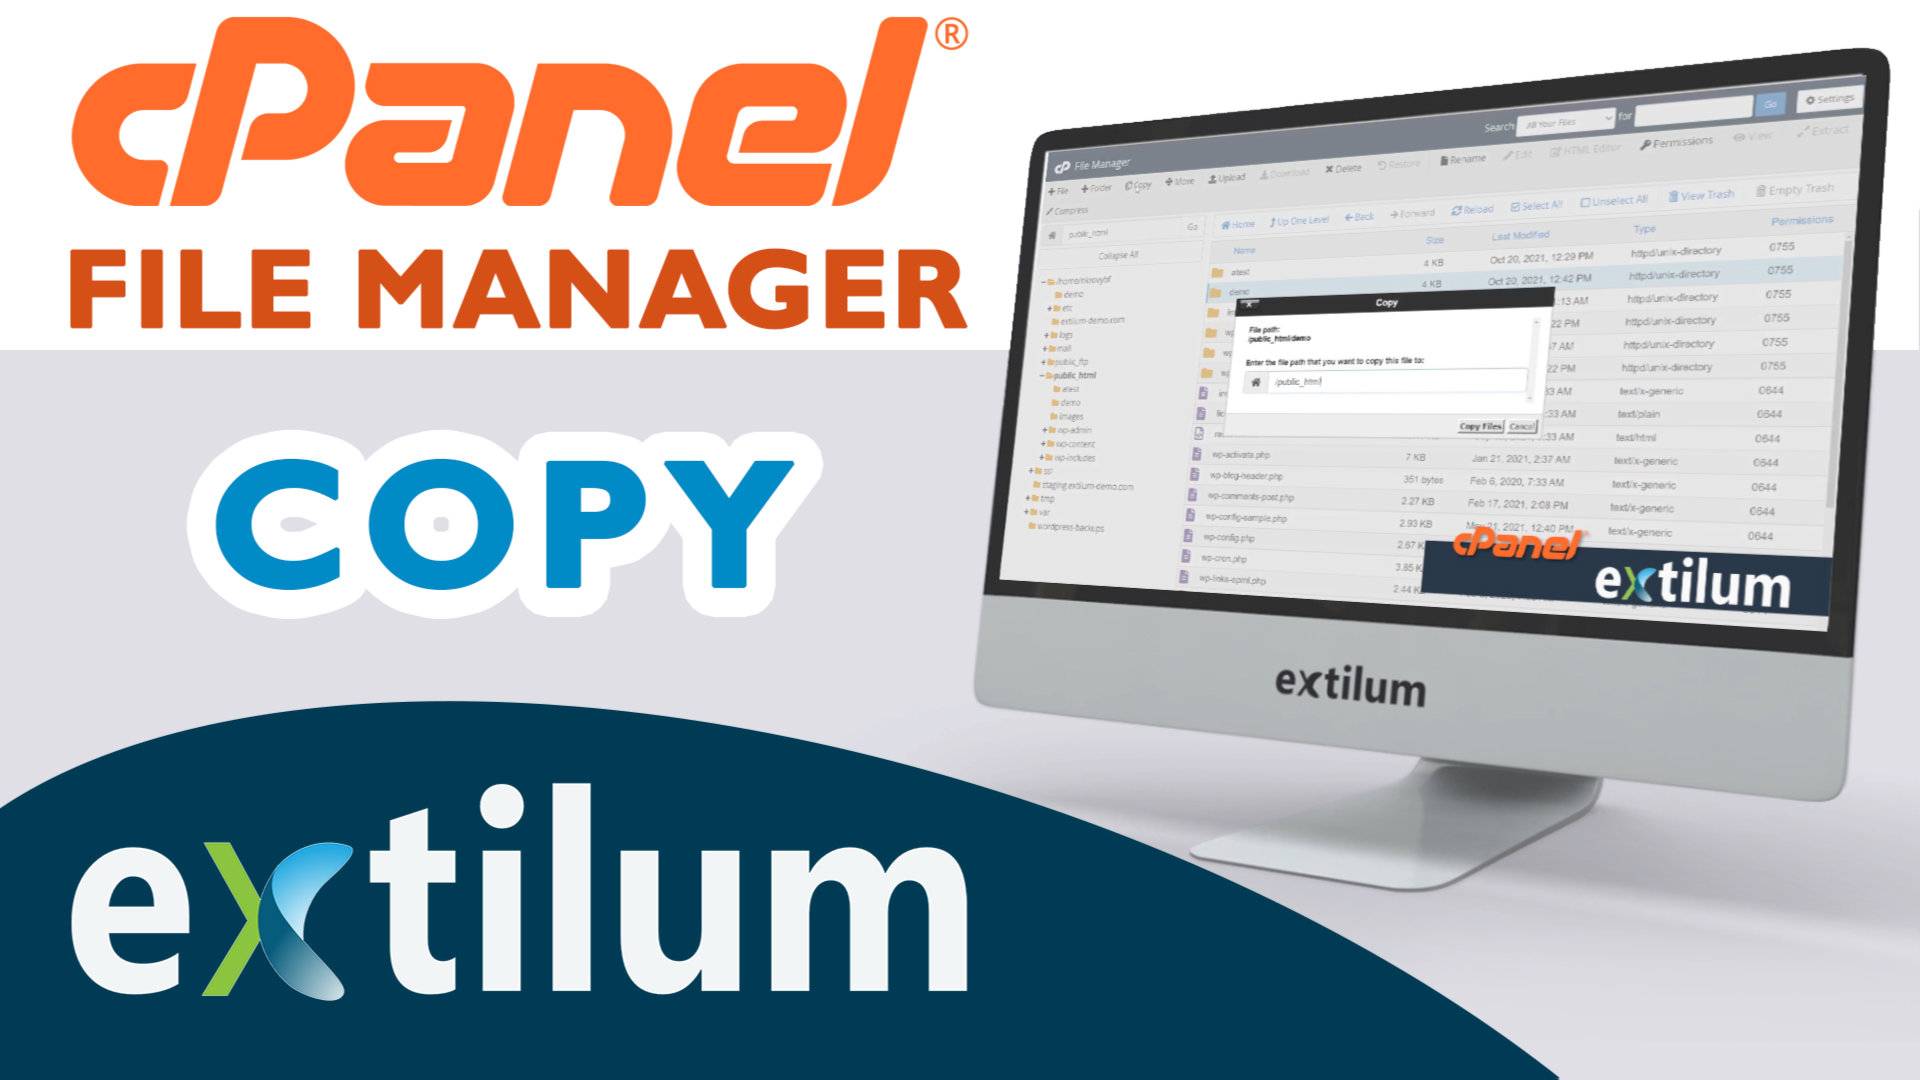 Extilum cpanel - file manager - copy